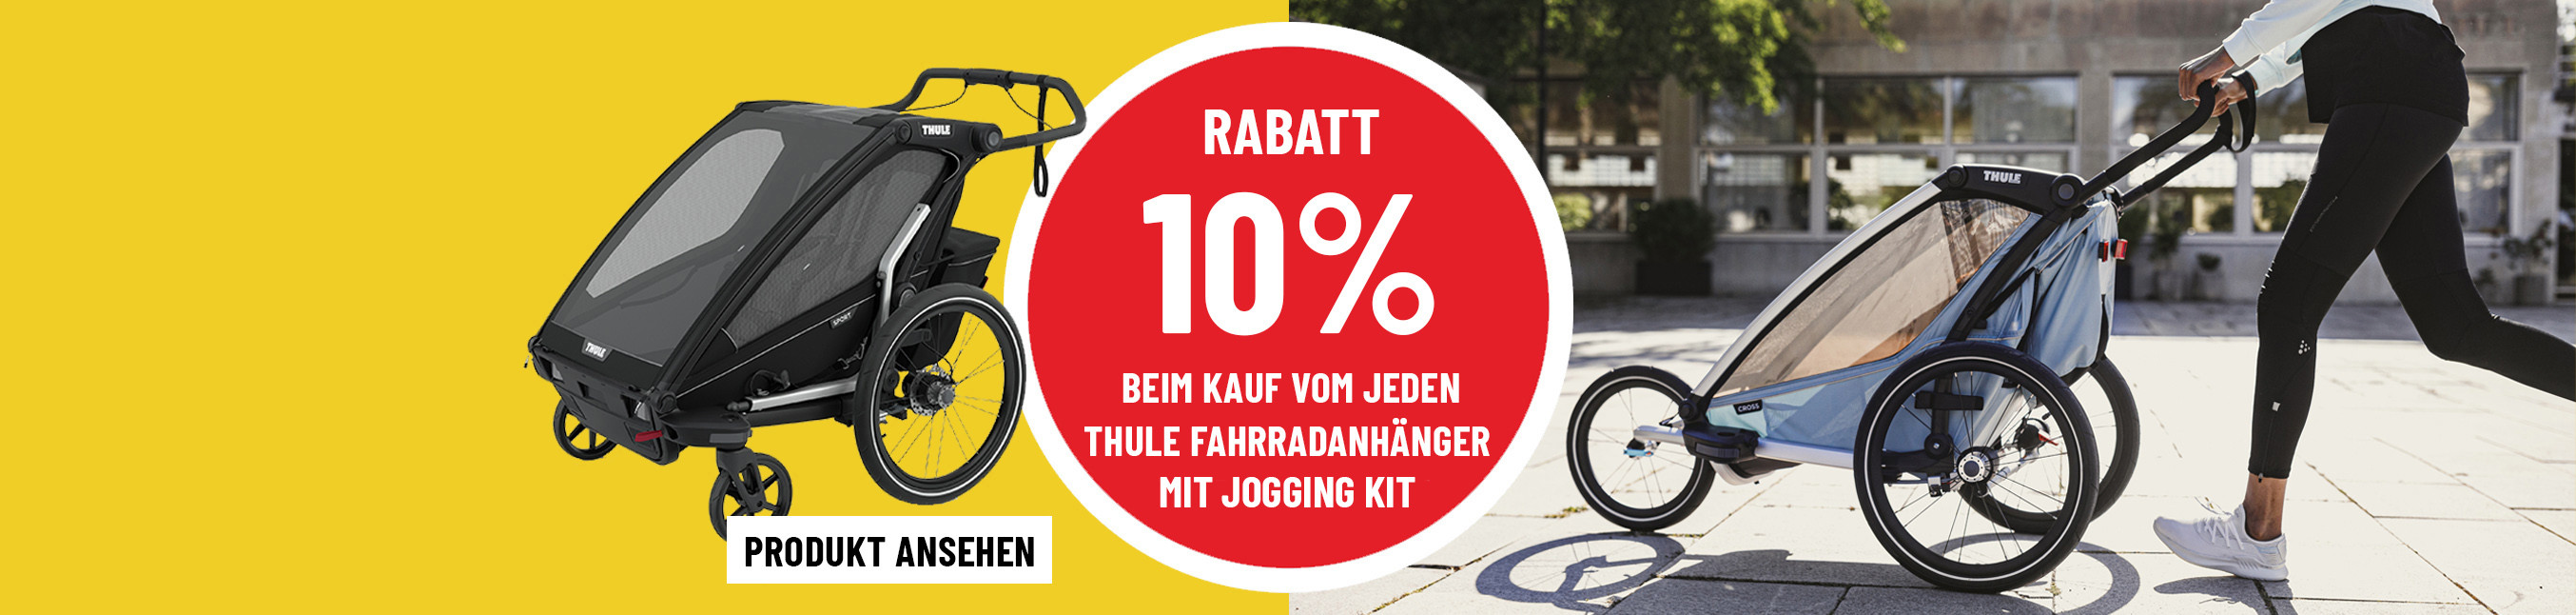 Rabatt 10% auf Thule chariot mit jogging kit